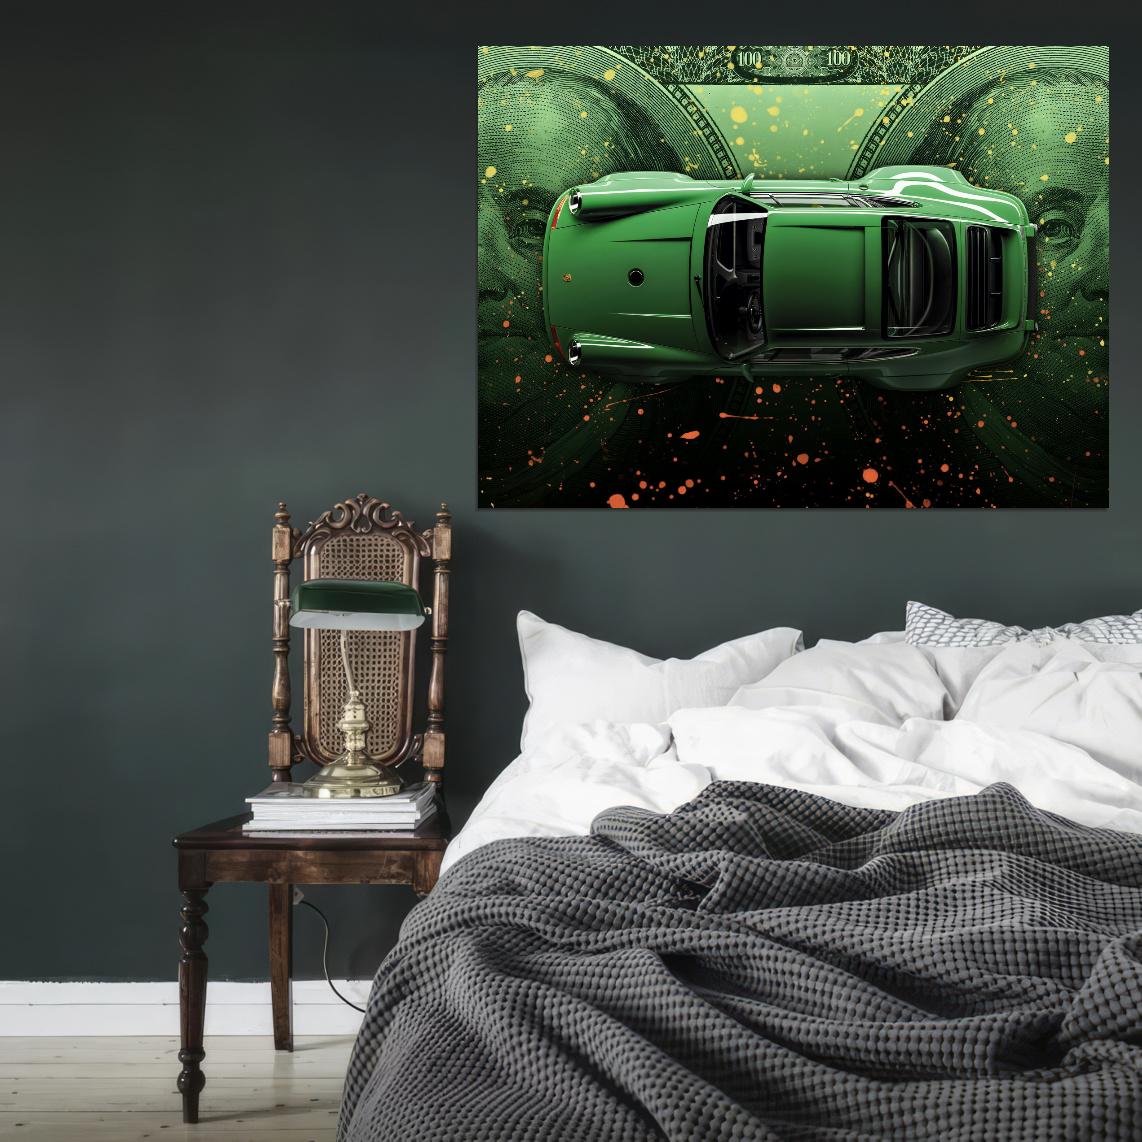 Green Porshe 911 Turbo Dollar Old Sportcar Car Poster